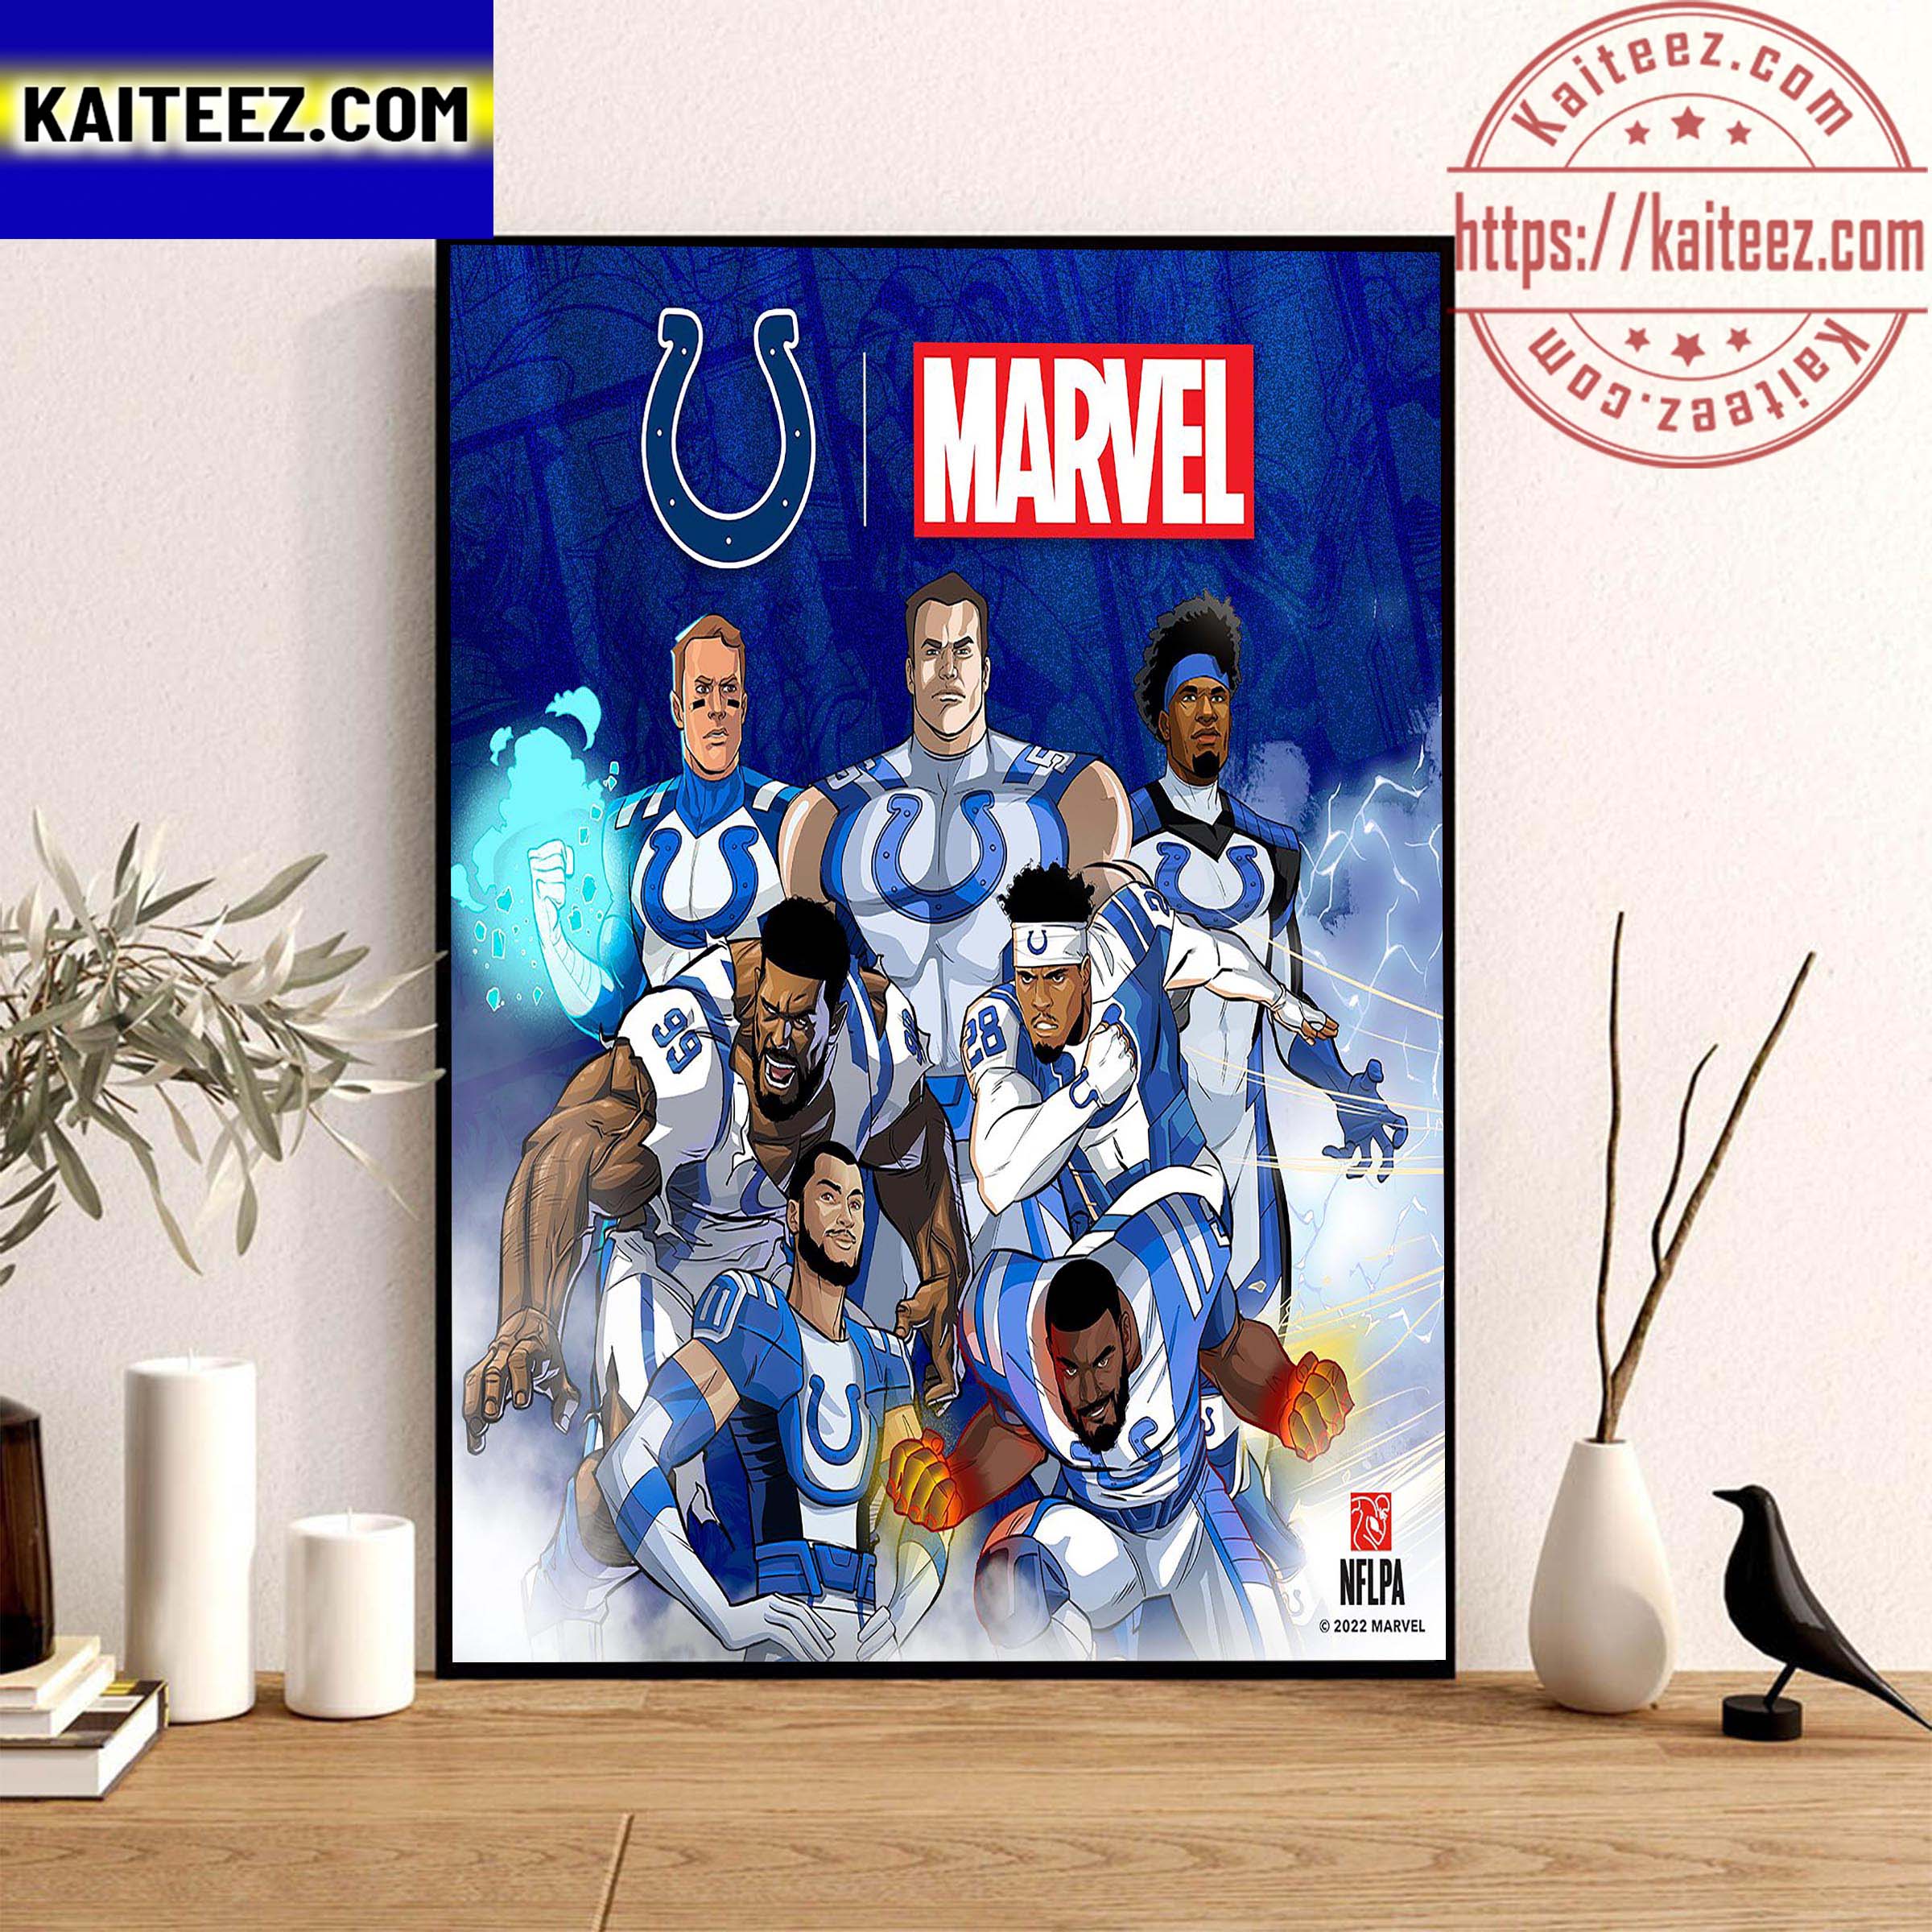 NFL Indianapolis Colts X Marvel Studios Decoration Poster Canvas